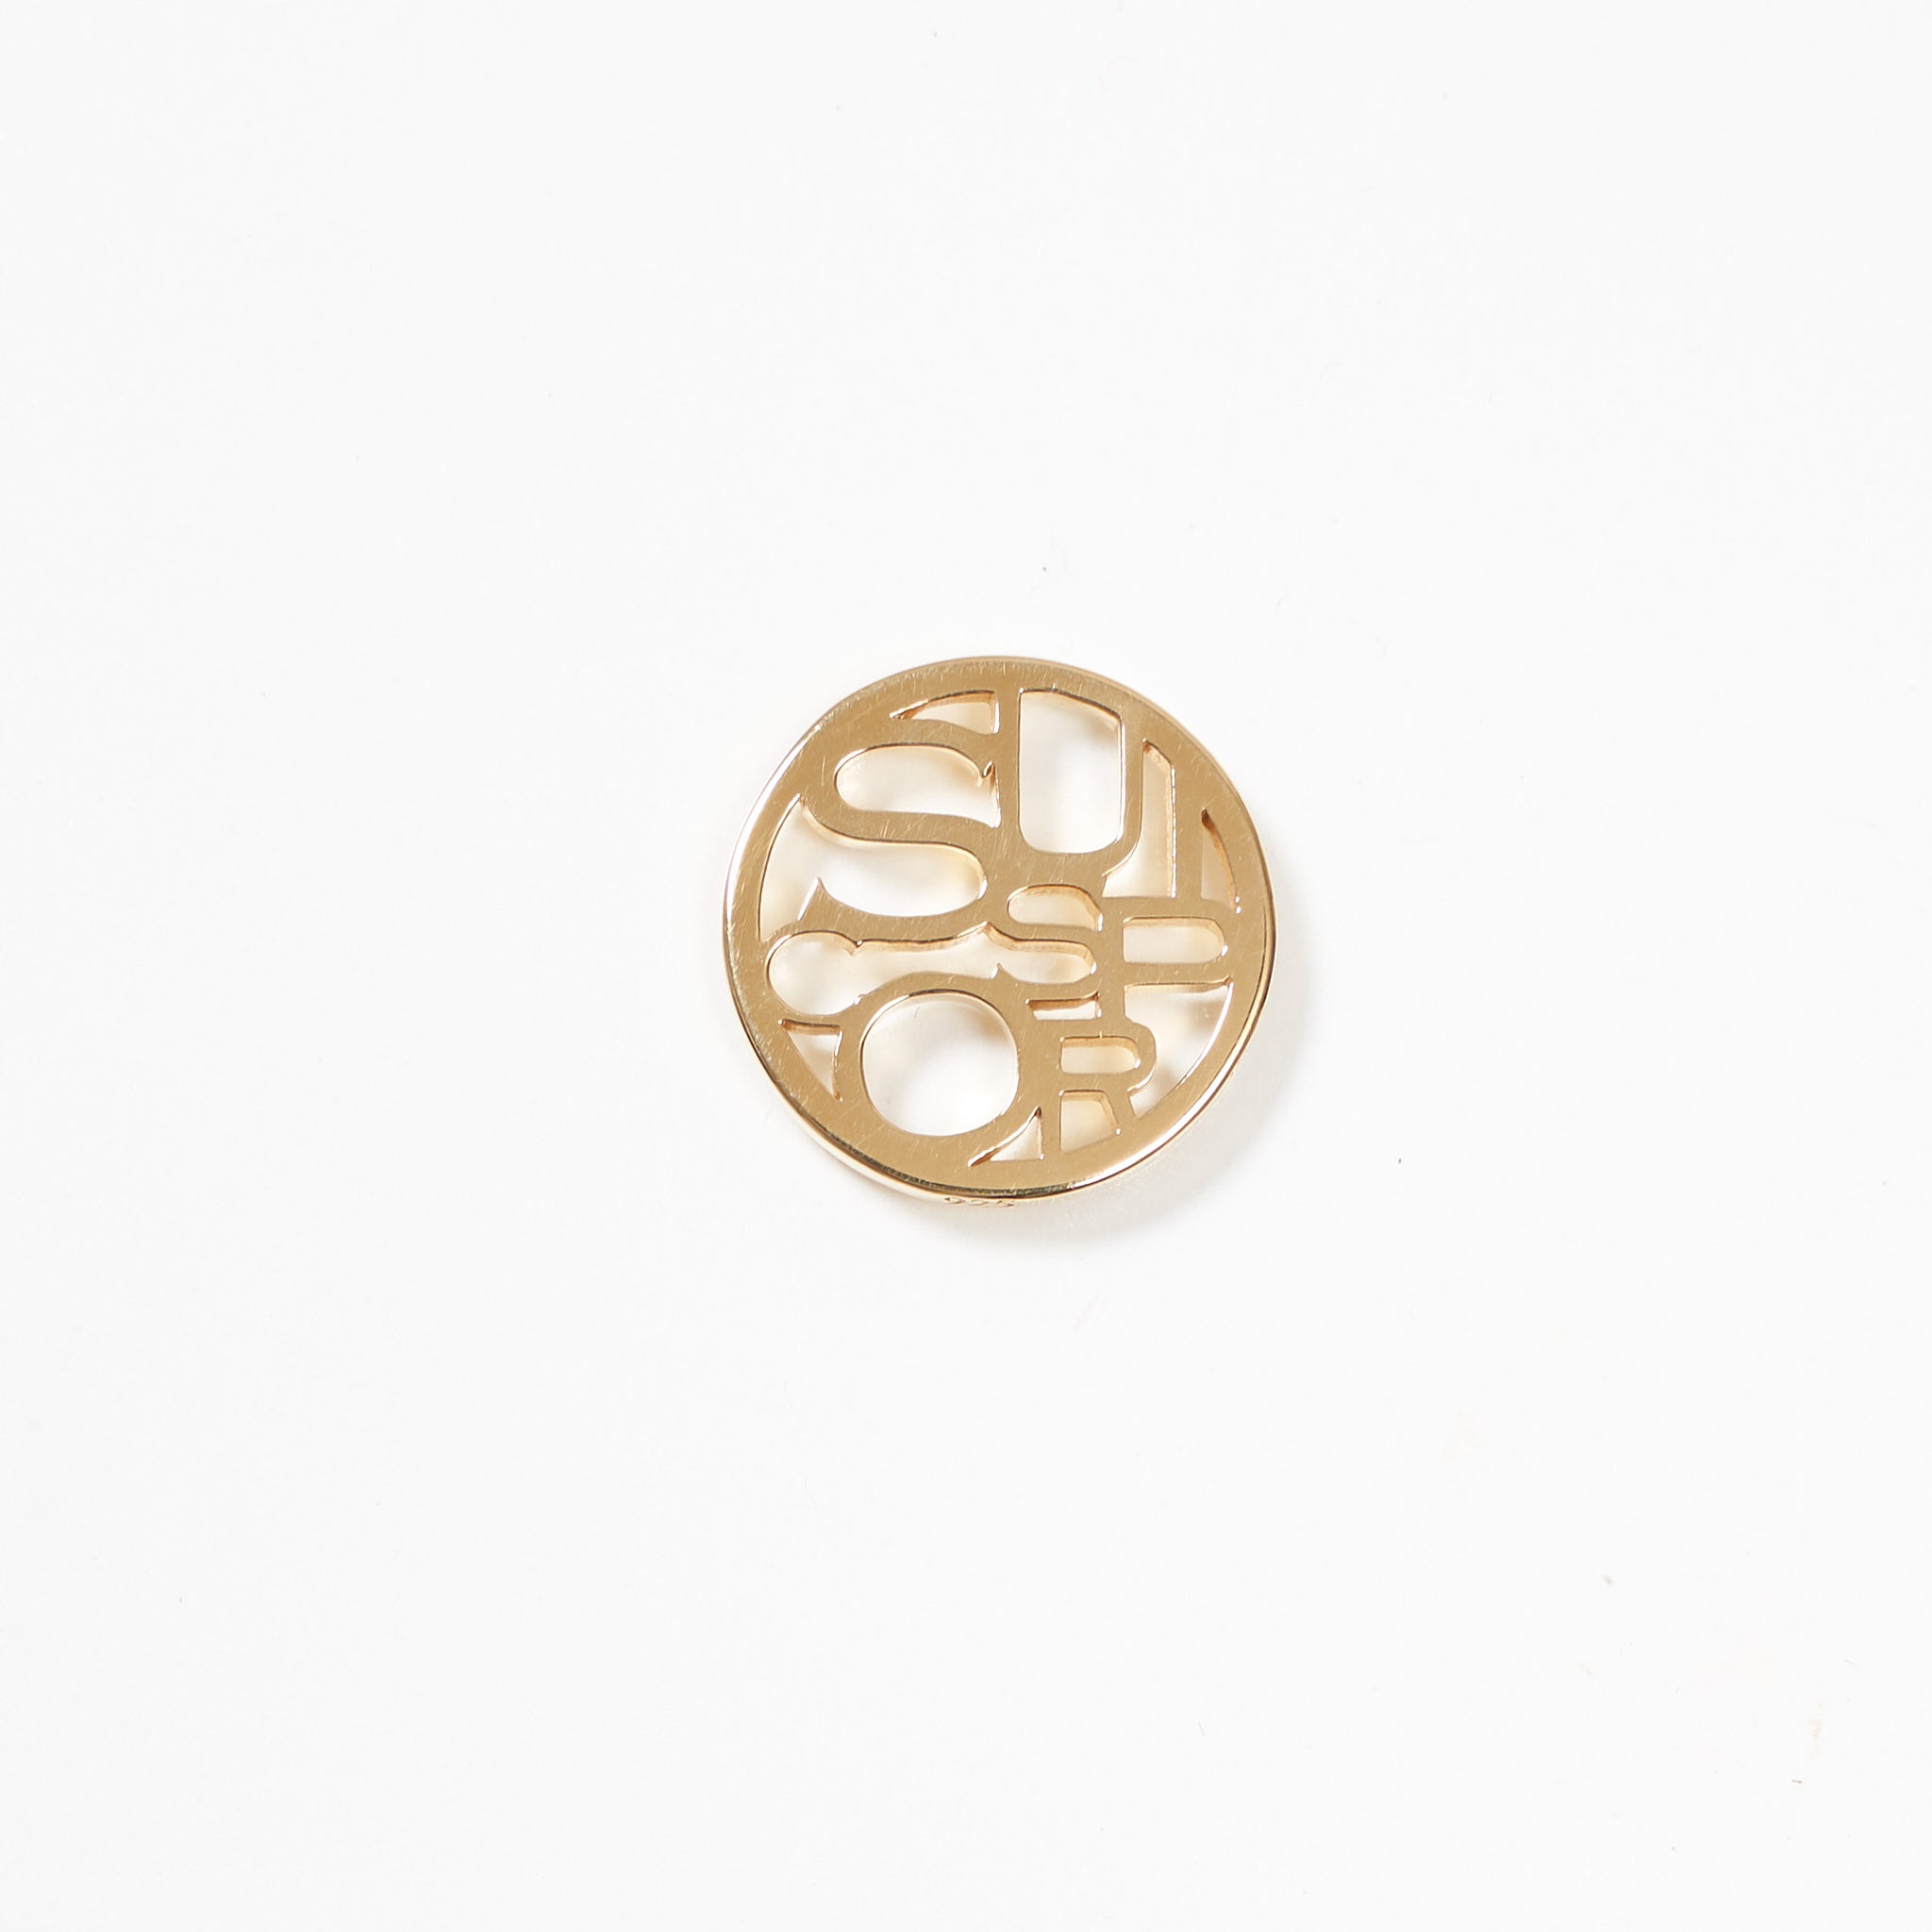 Zodiac Circle Necklace 48cm -Gold-